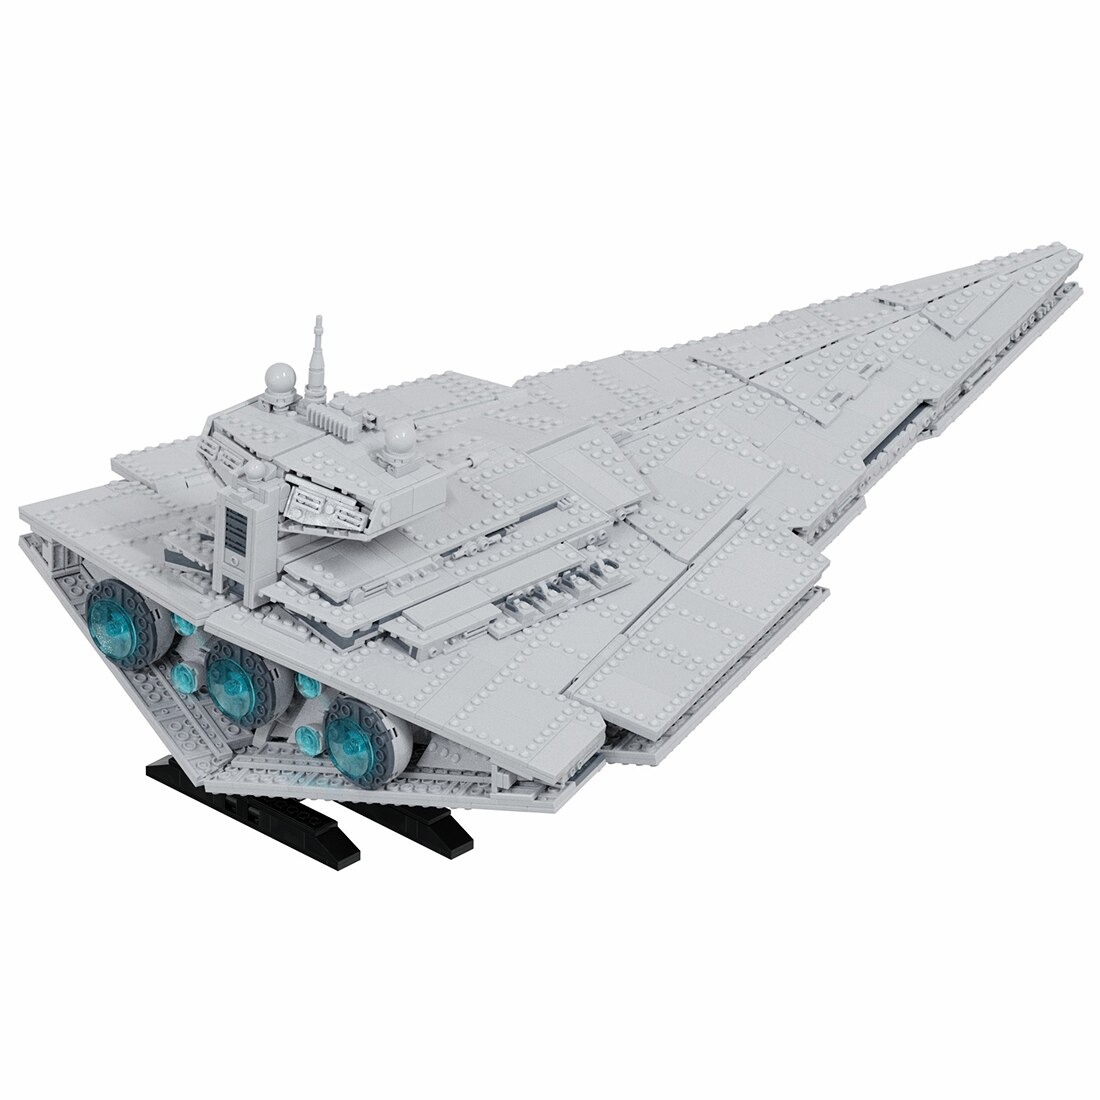 LEGO MOC Venator Class Star-Destroyer by TanBrickz